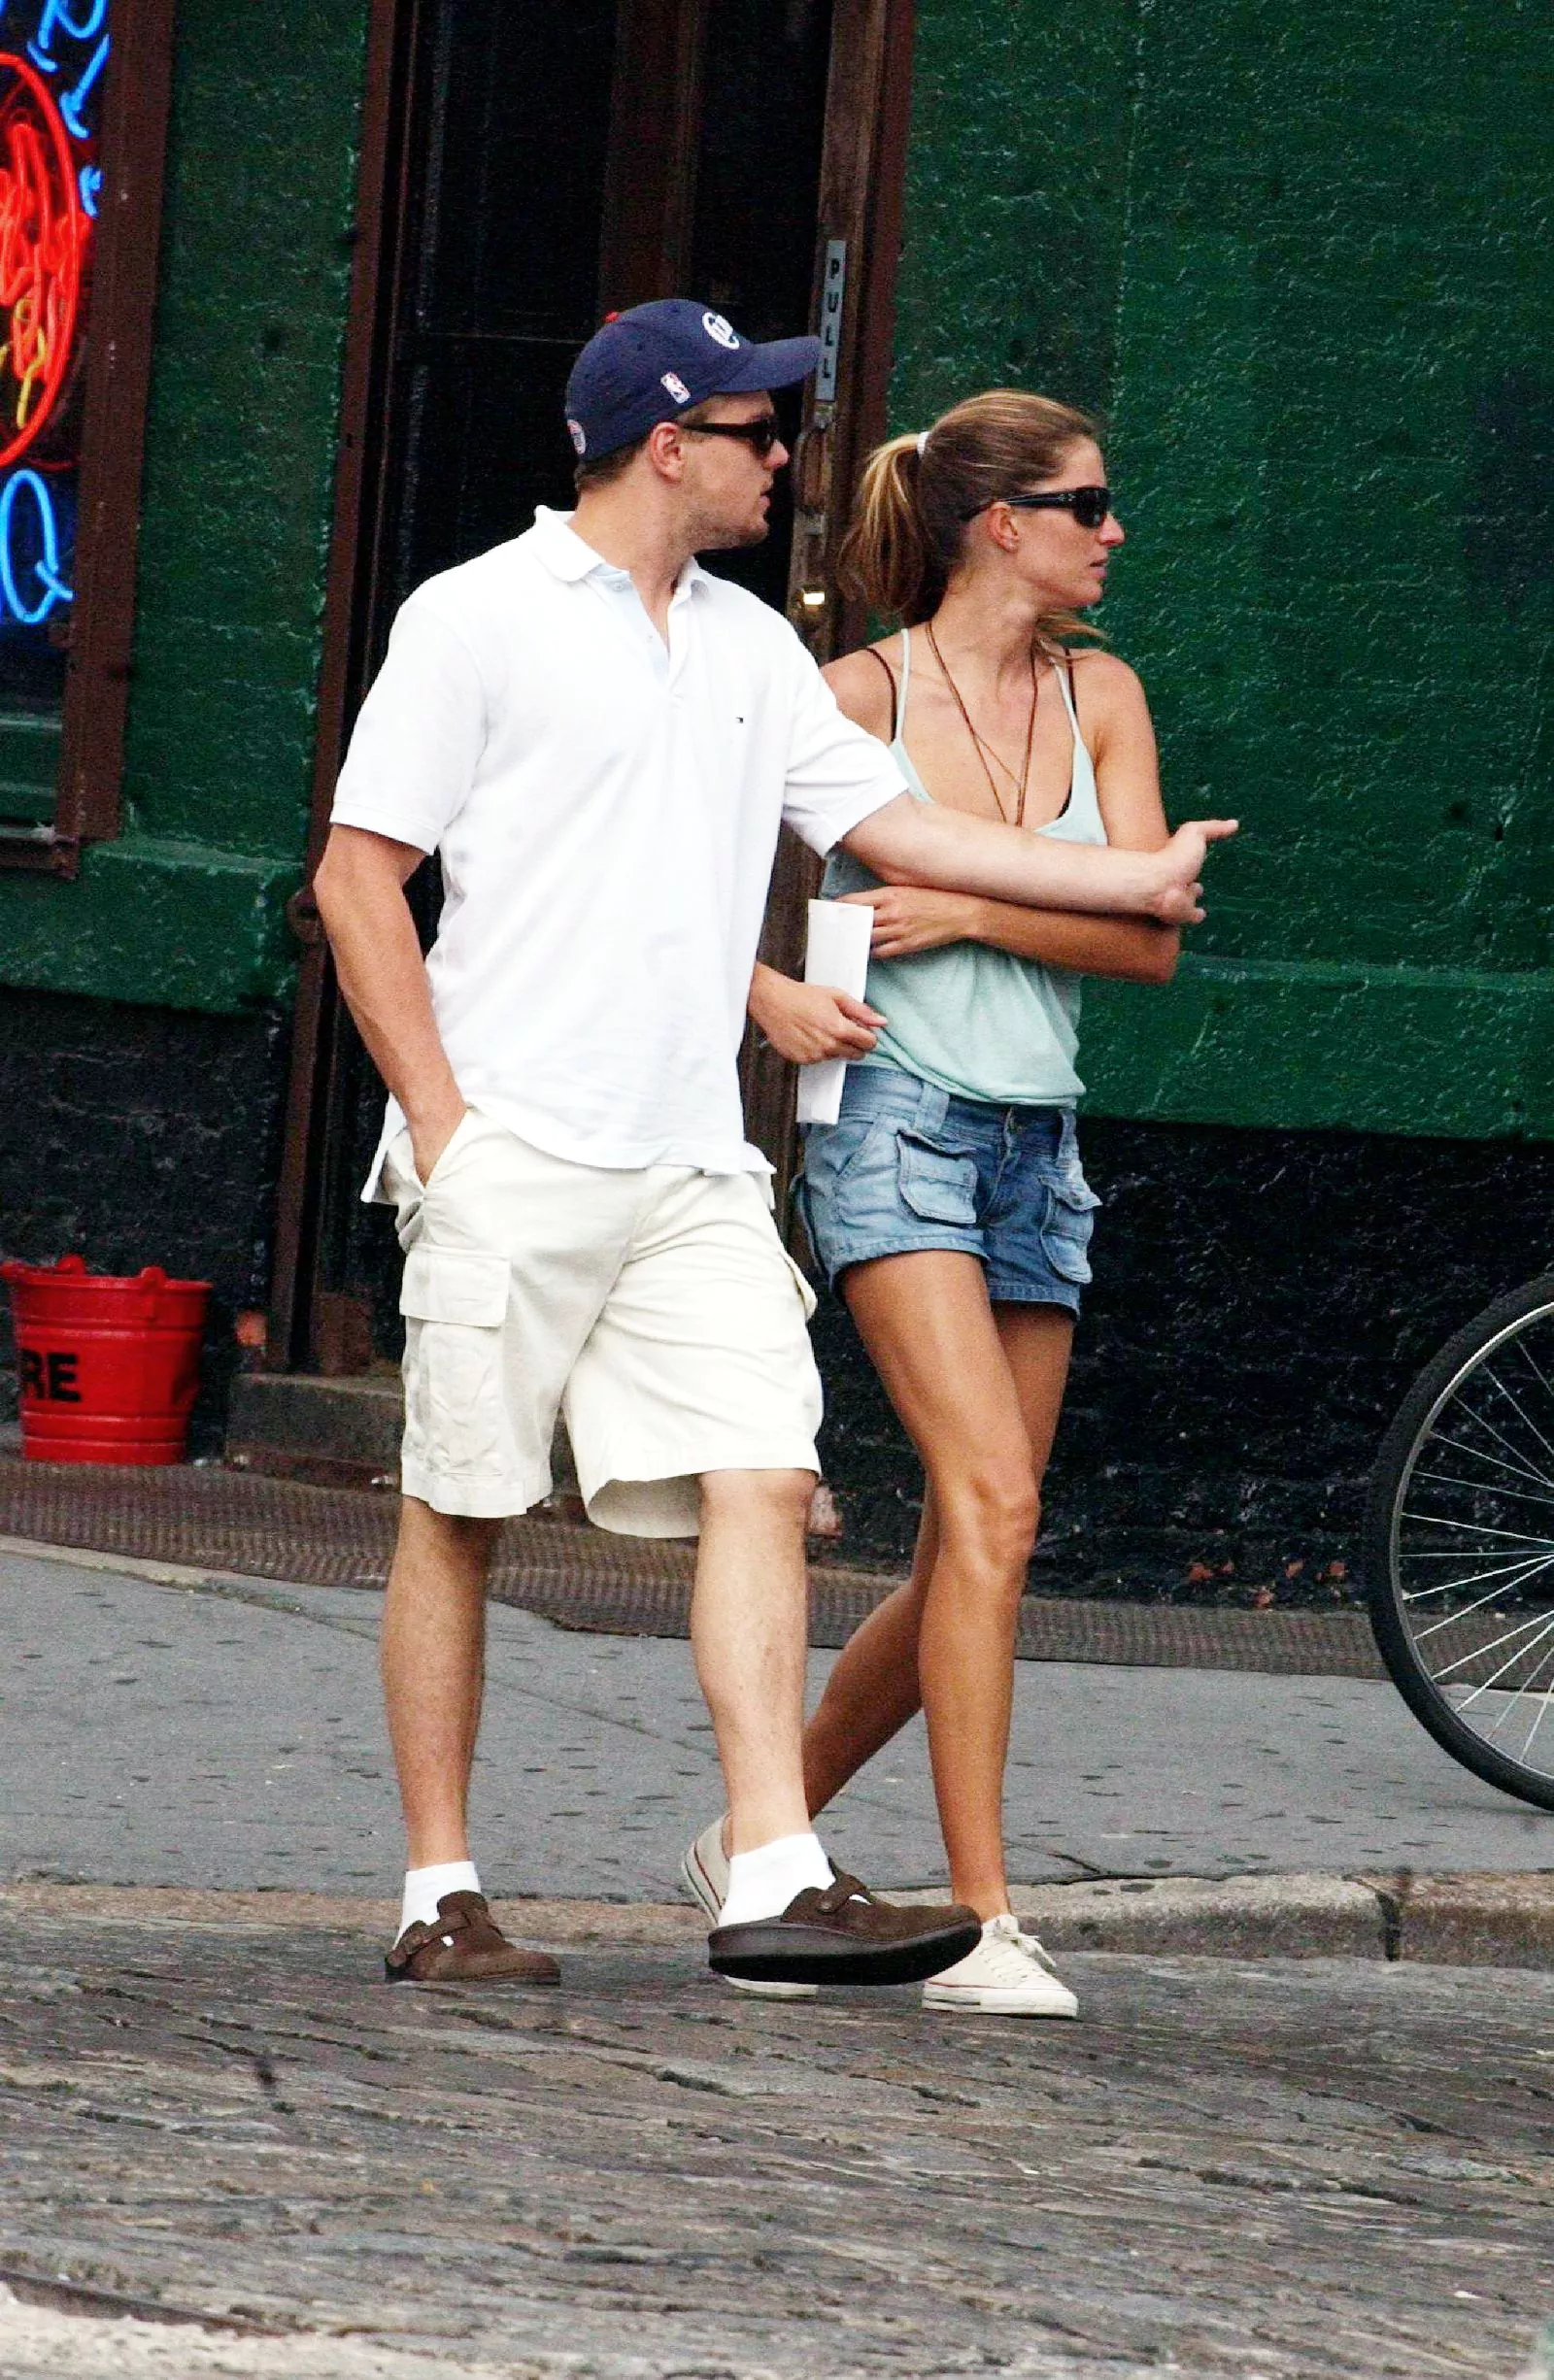 Leonardo DiCaprio and Gisele Bündchen meet for lunch at Vento restaurant, New York, July 19, 2005.